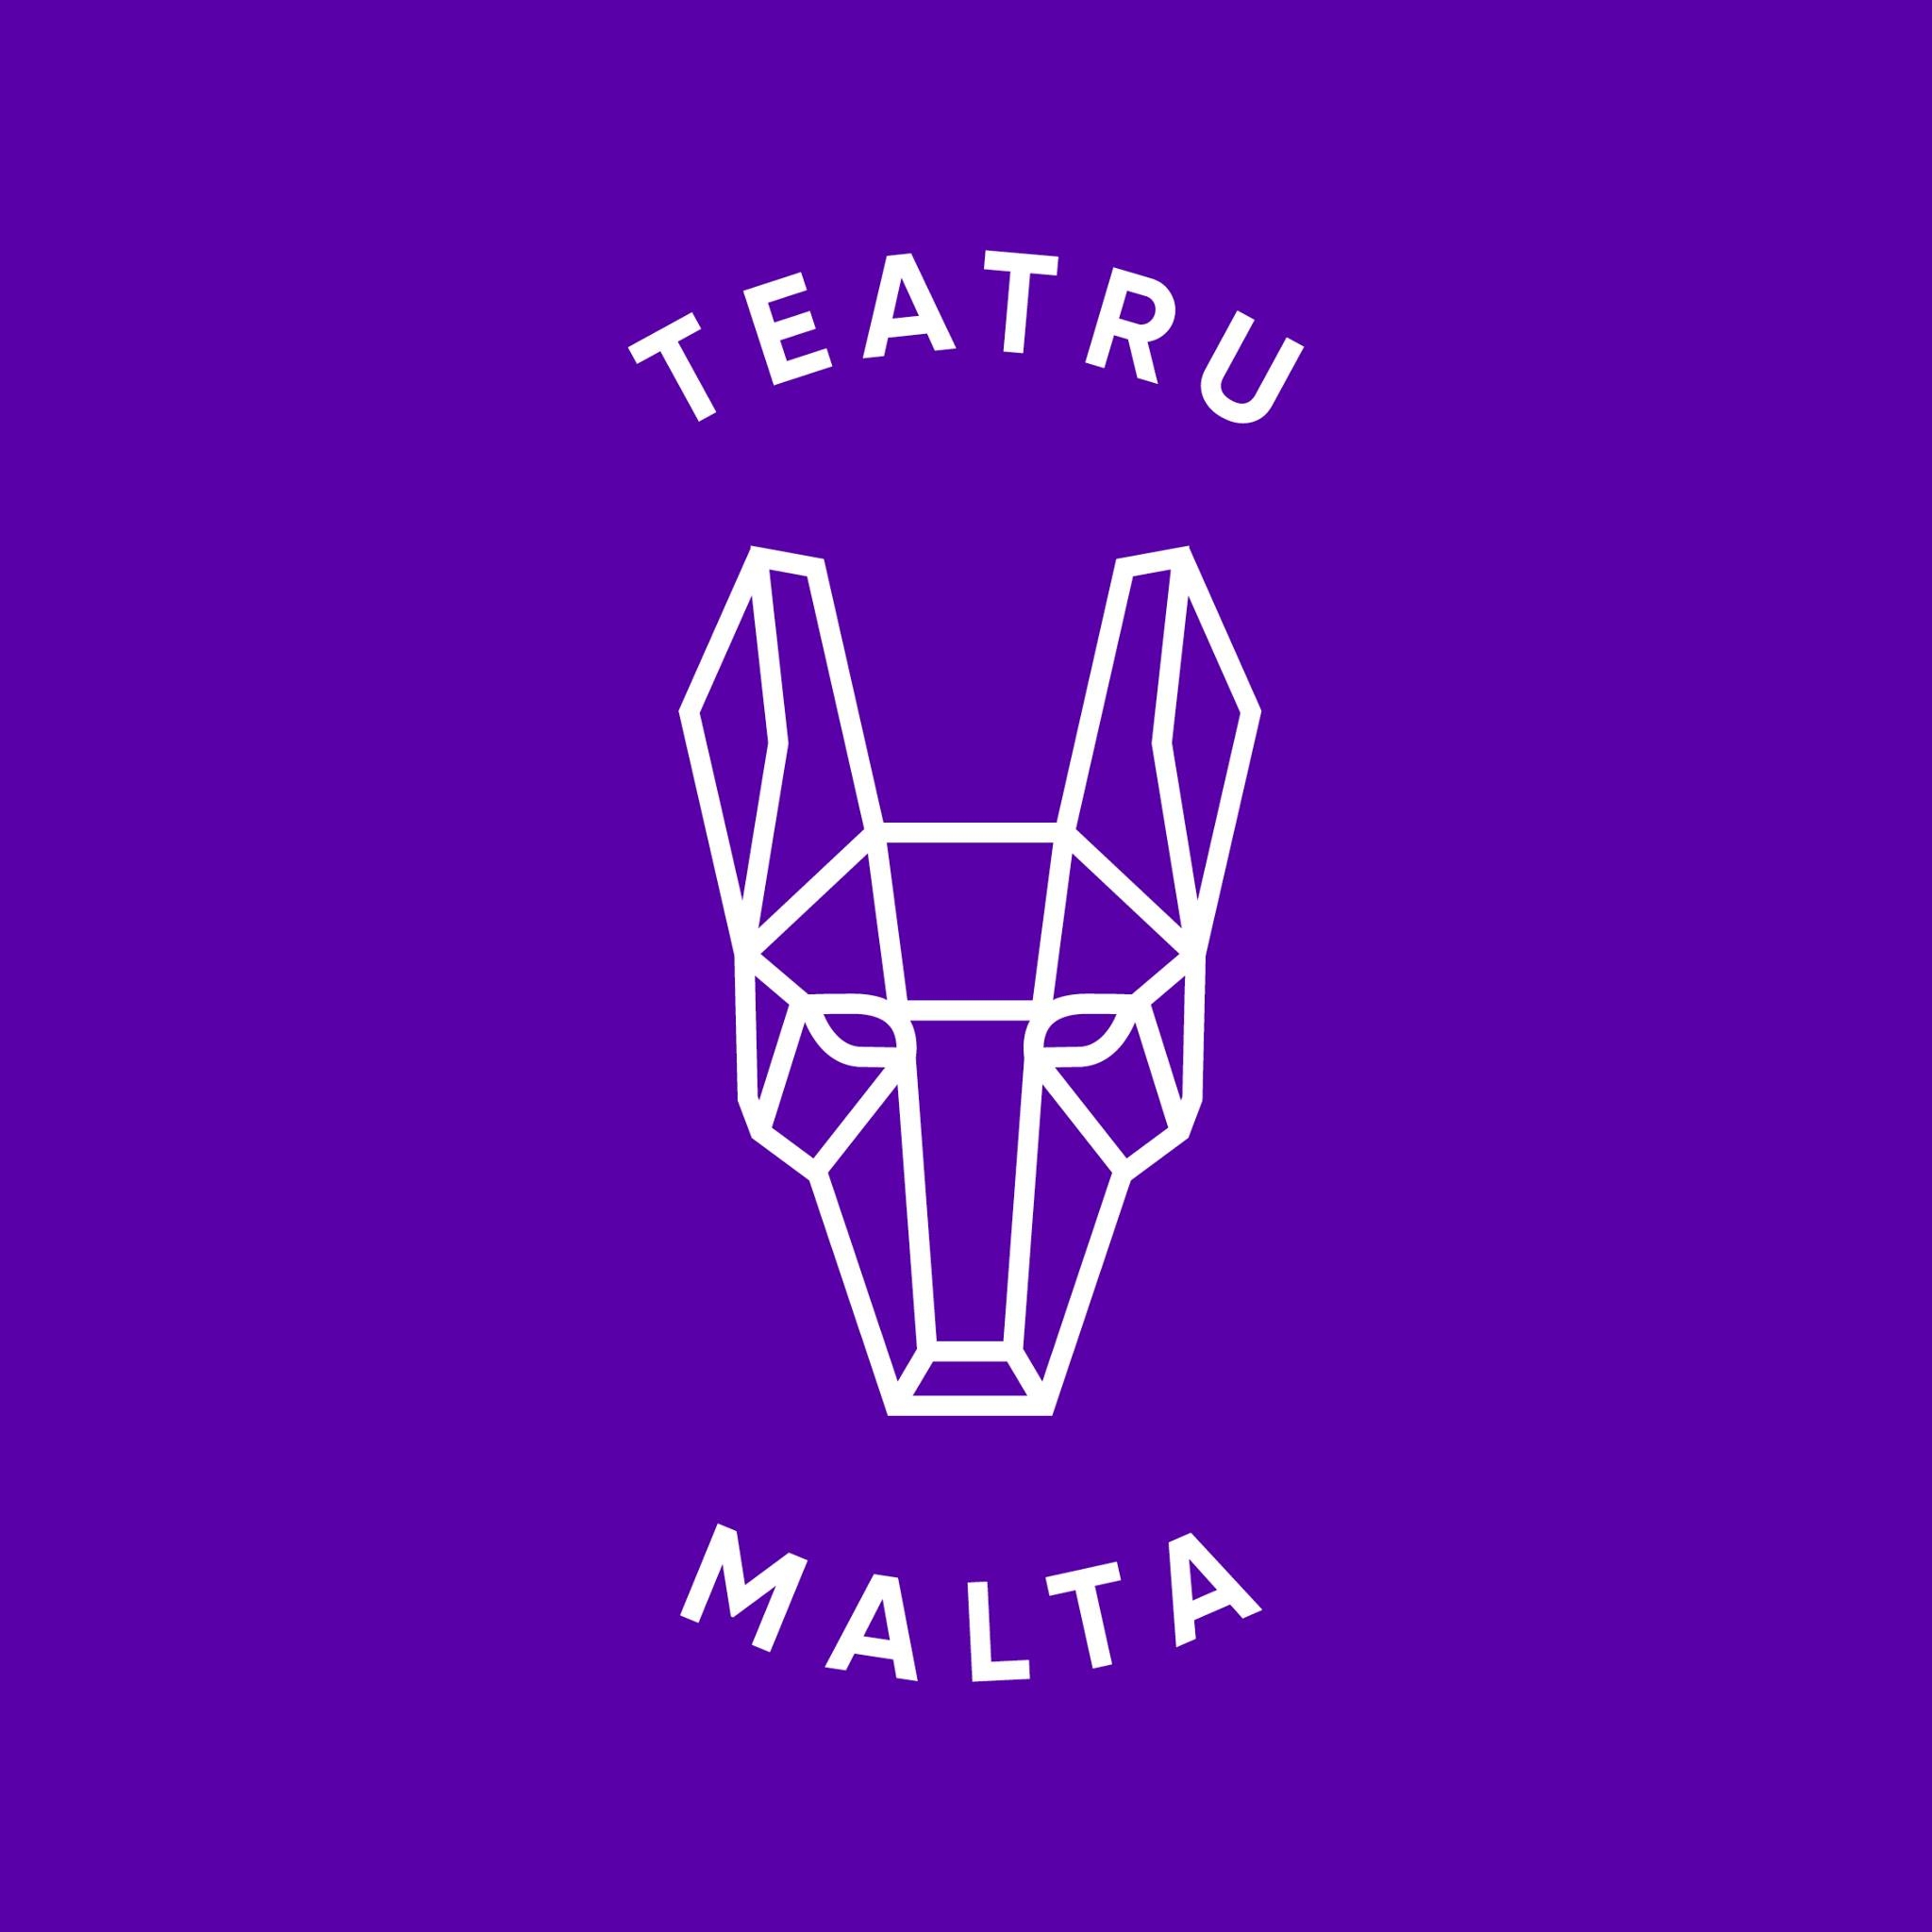 teatru malta logo